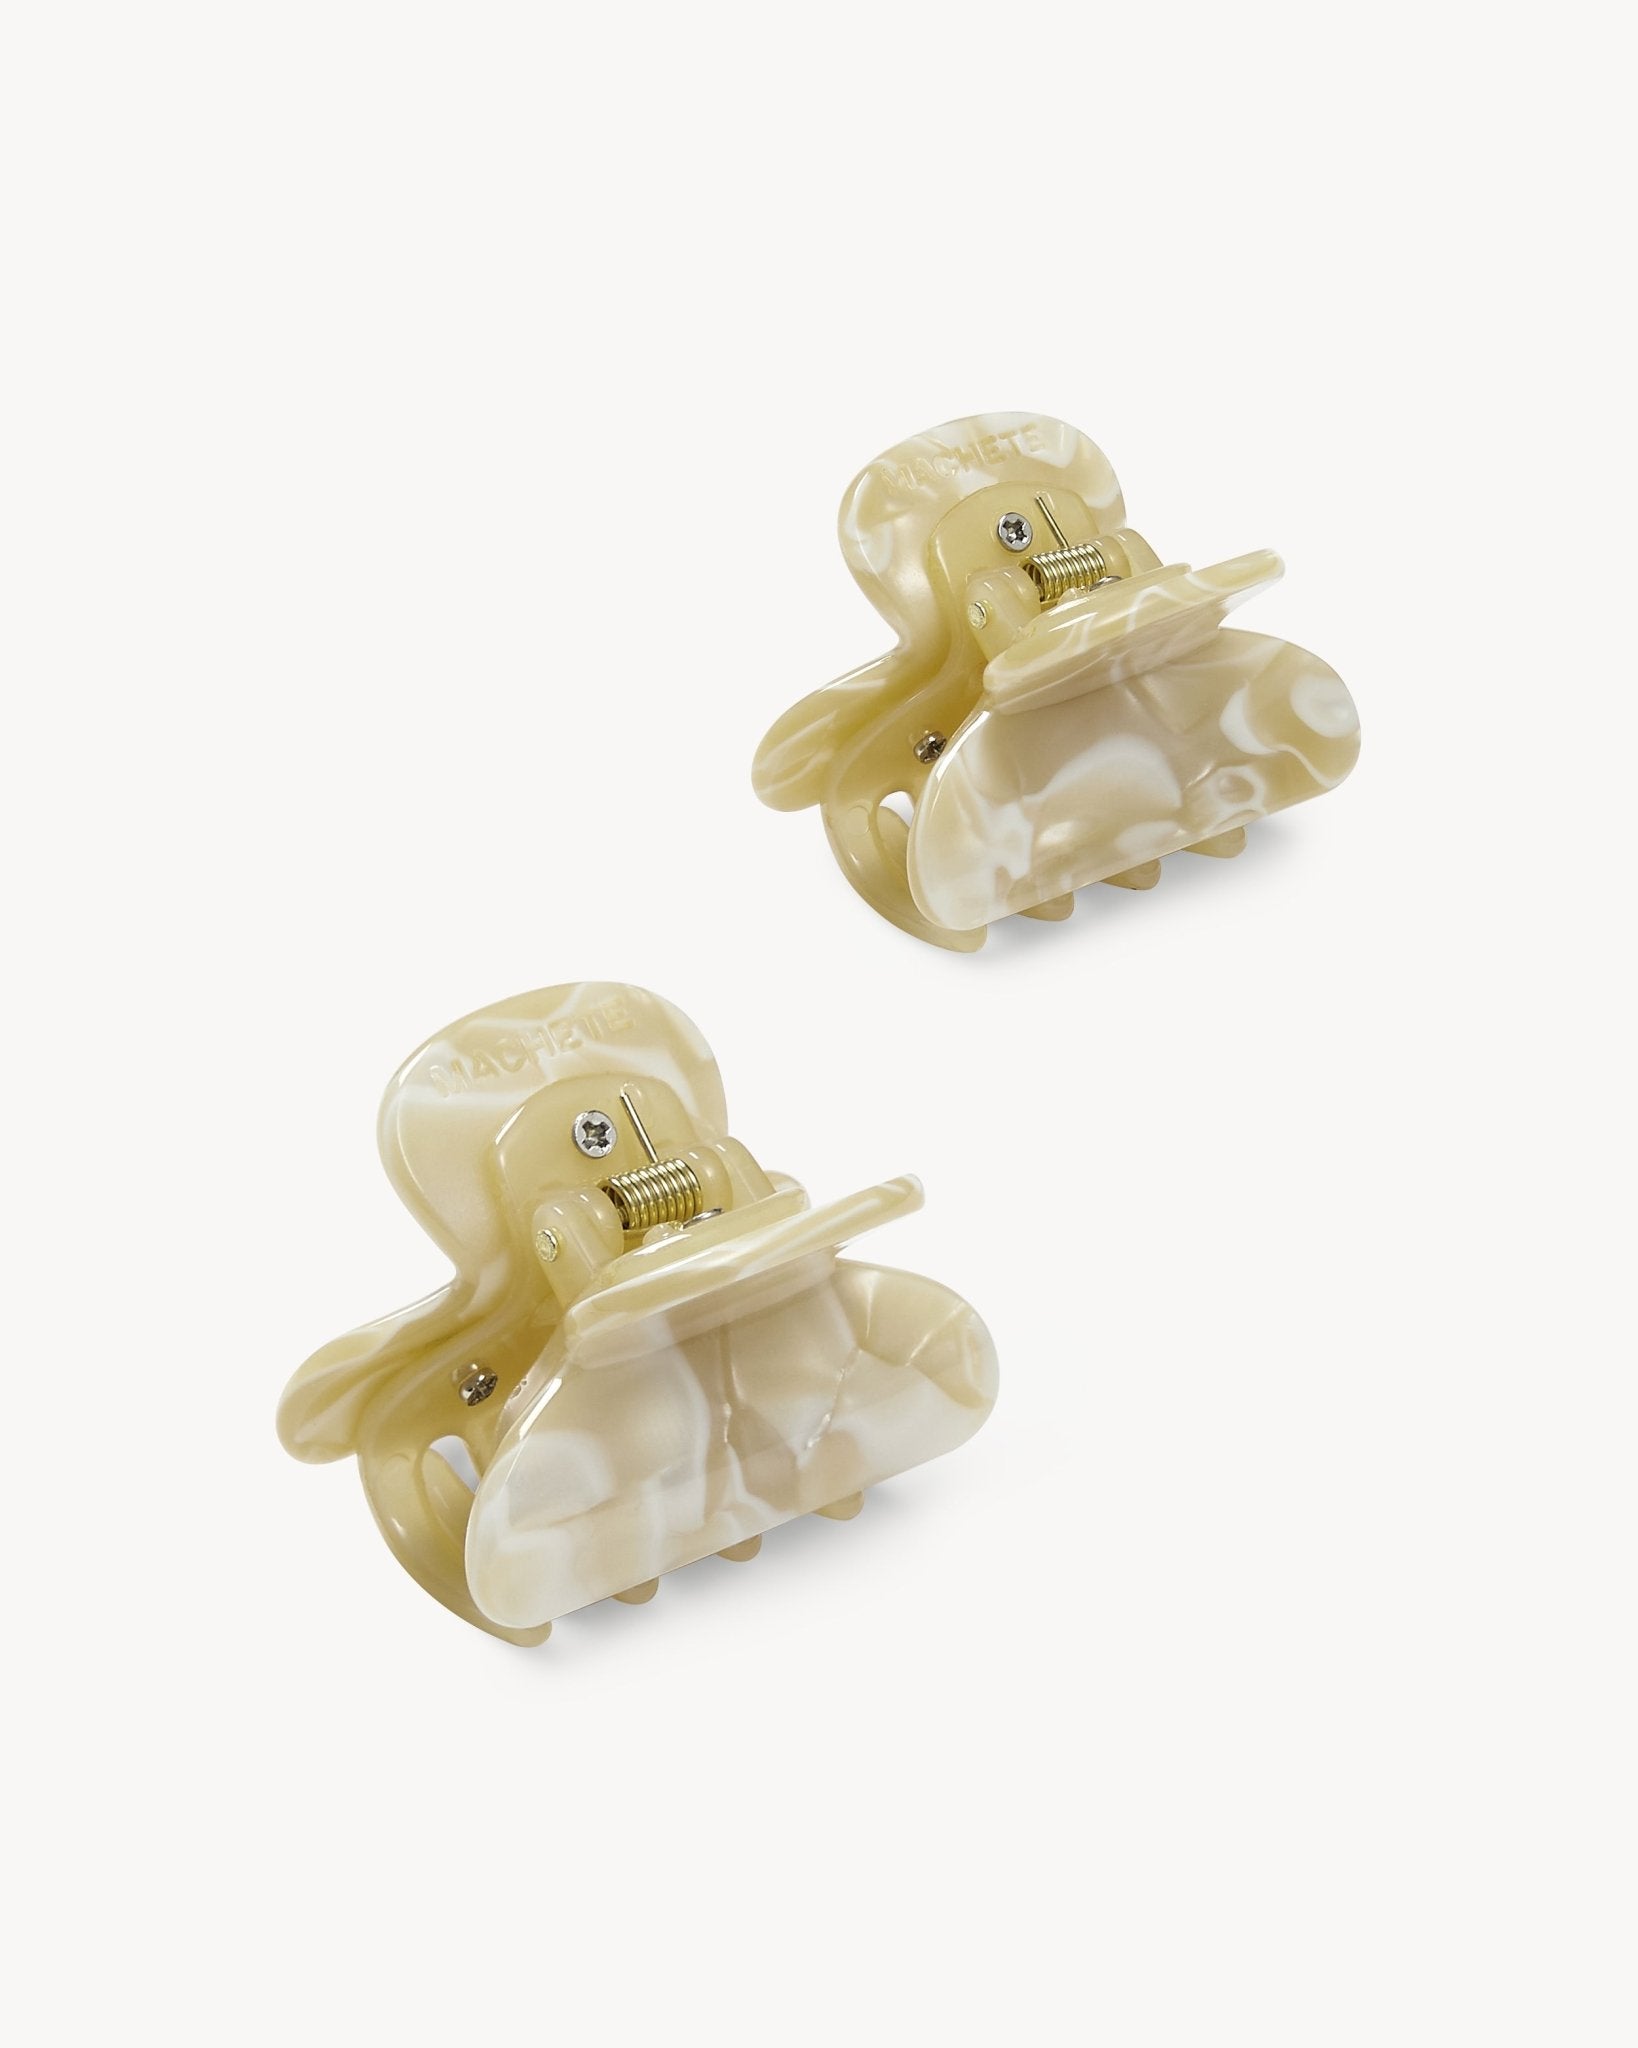 Twin Heirloom Claws in Ivory - MACHETE